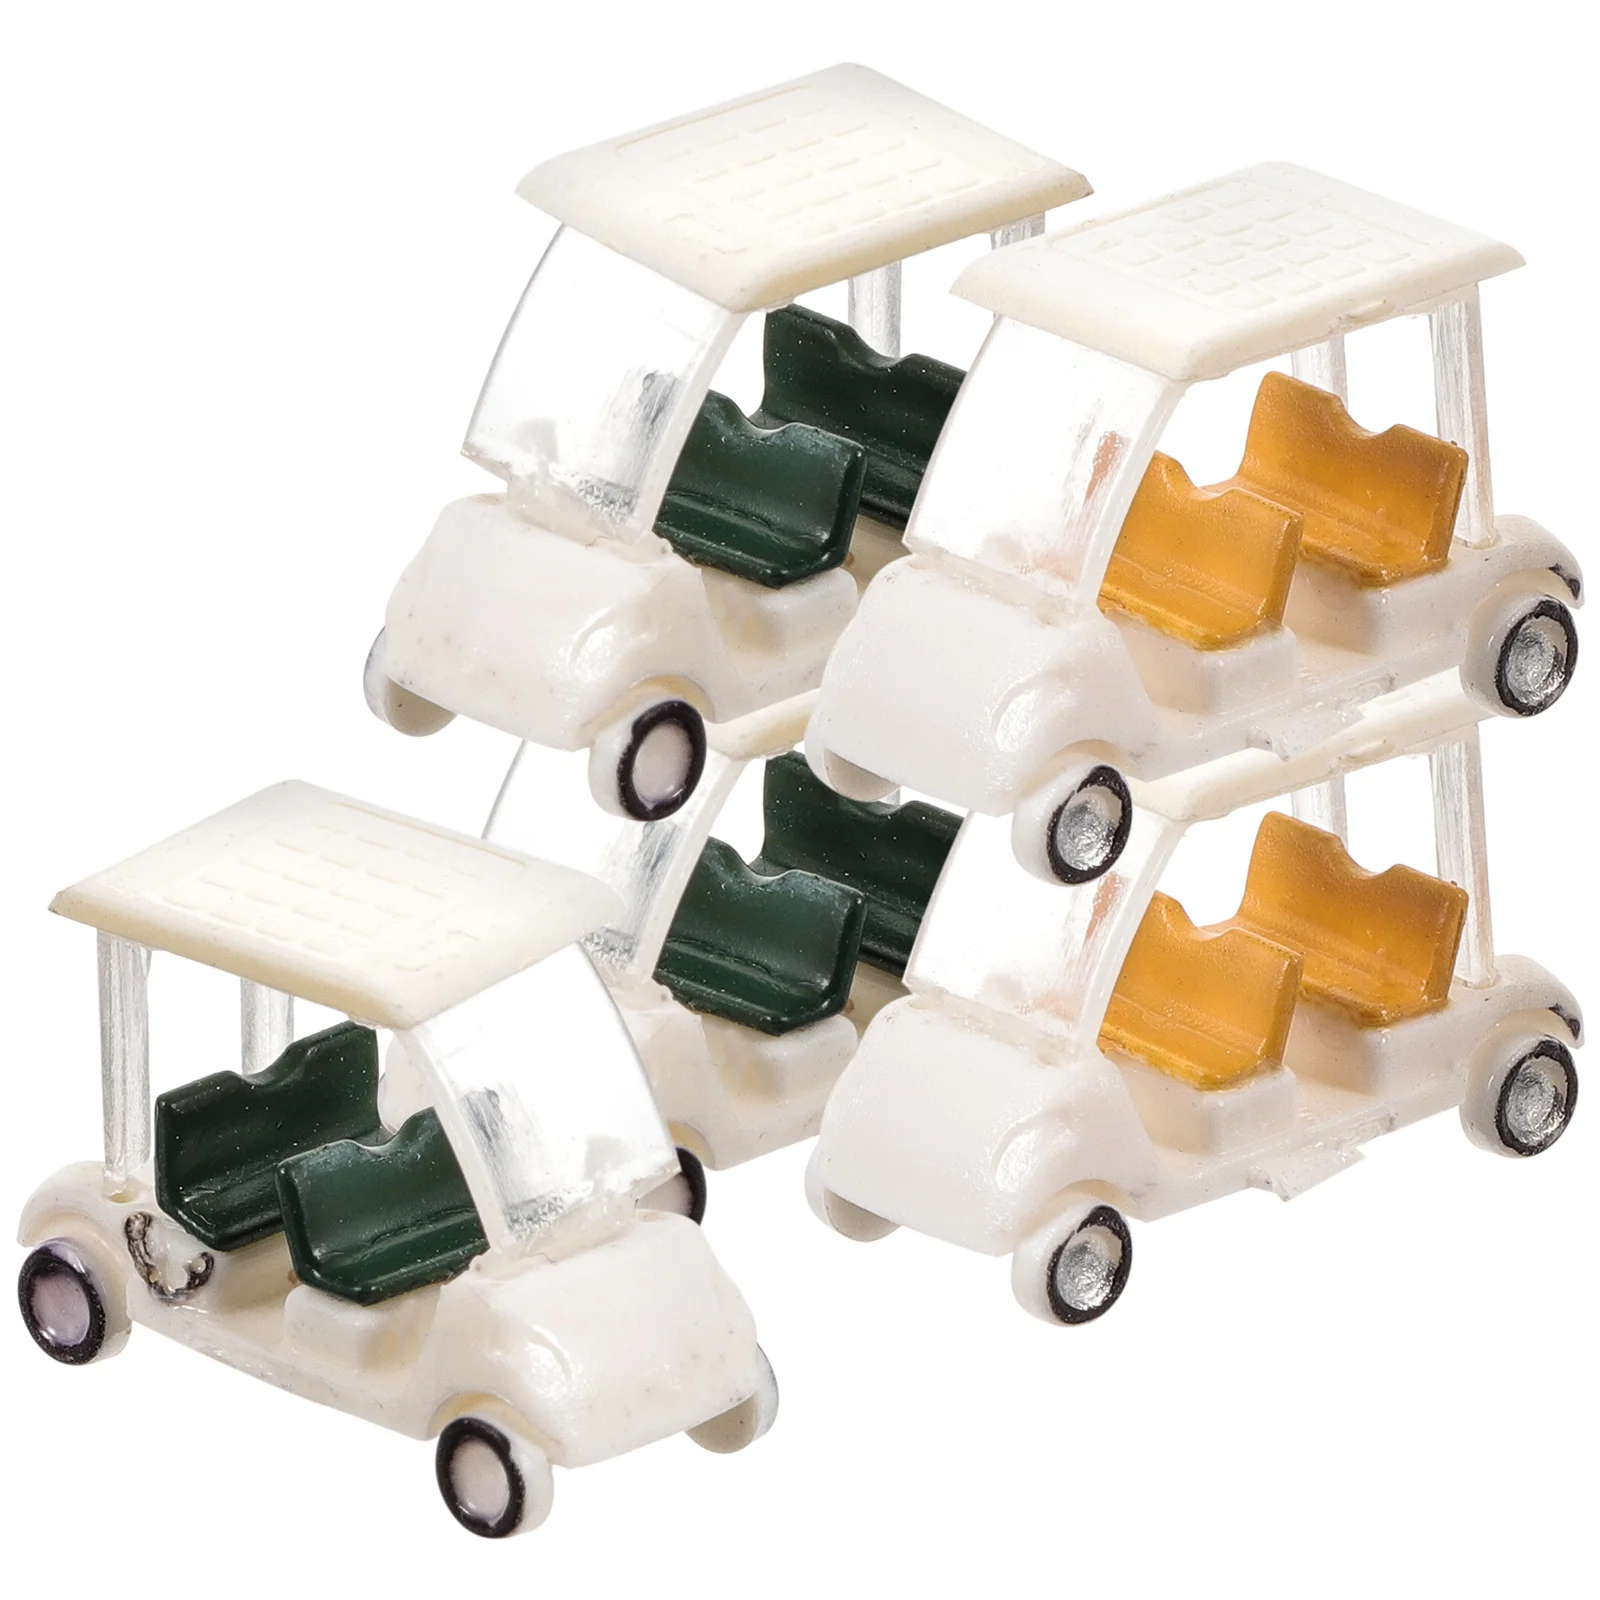 

5Pcs Mini Golf Cart Models Small Golf Cart Figurines Sand Table Golfs Cart Models Outdoor Golf Cart Toys